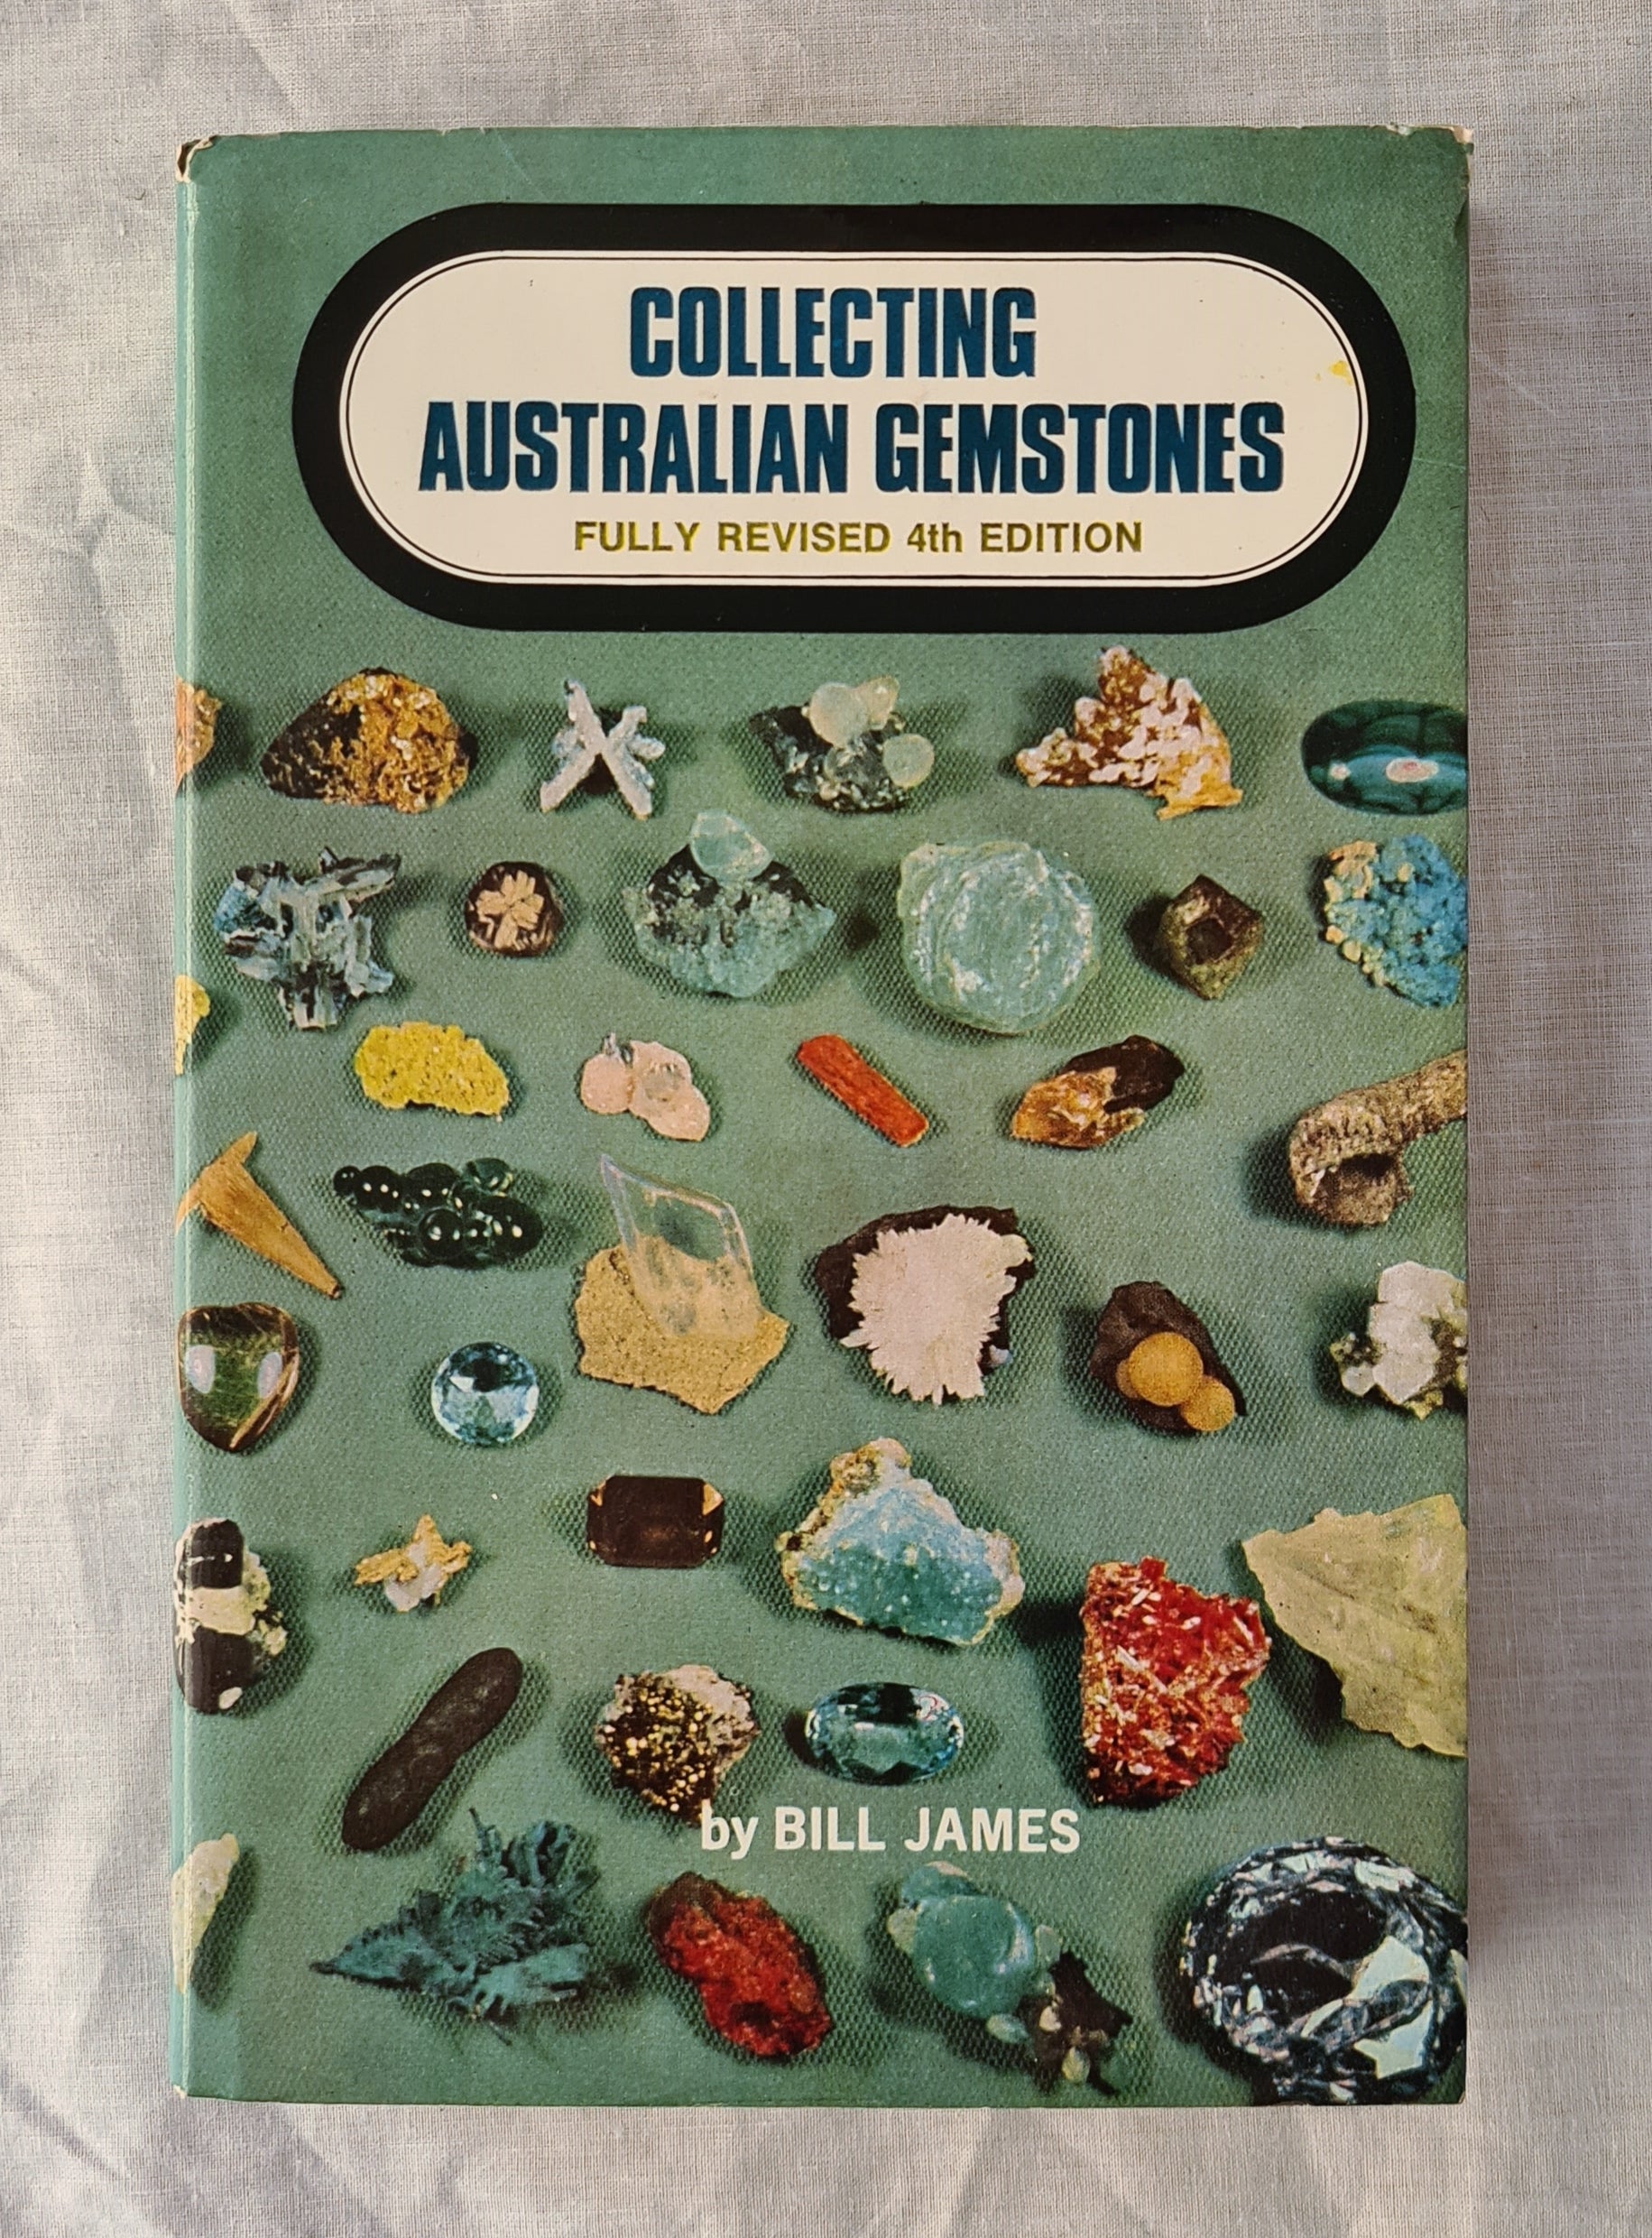 Collecting Australian Gemstones by Bill James